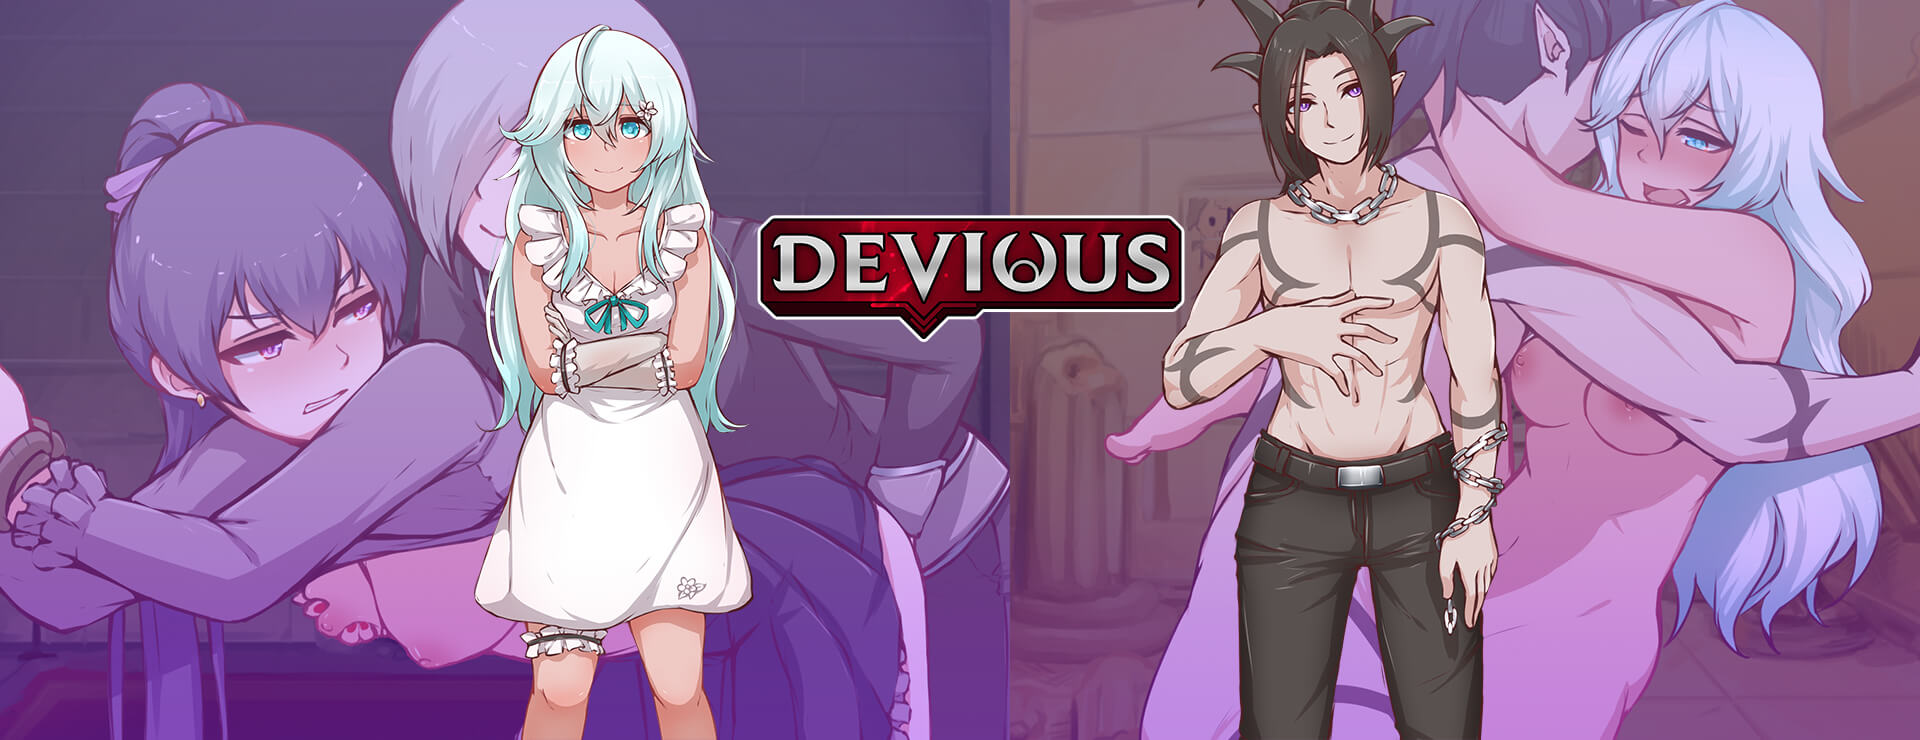 Devious - アクションアドベンチャー ゲーム